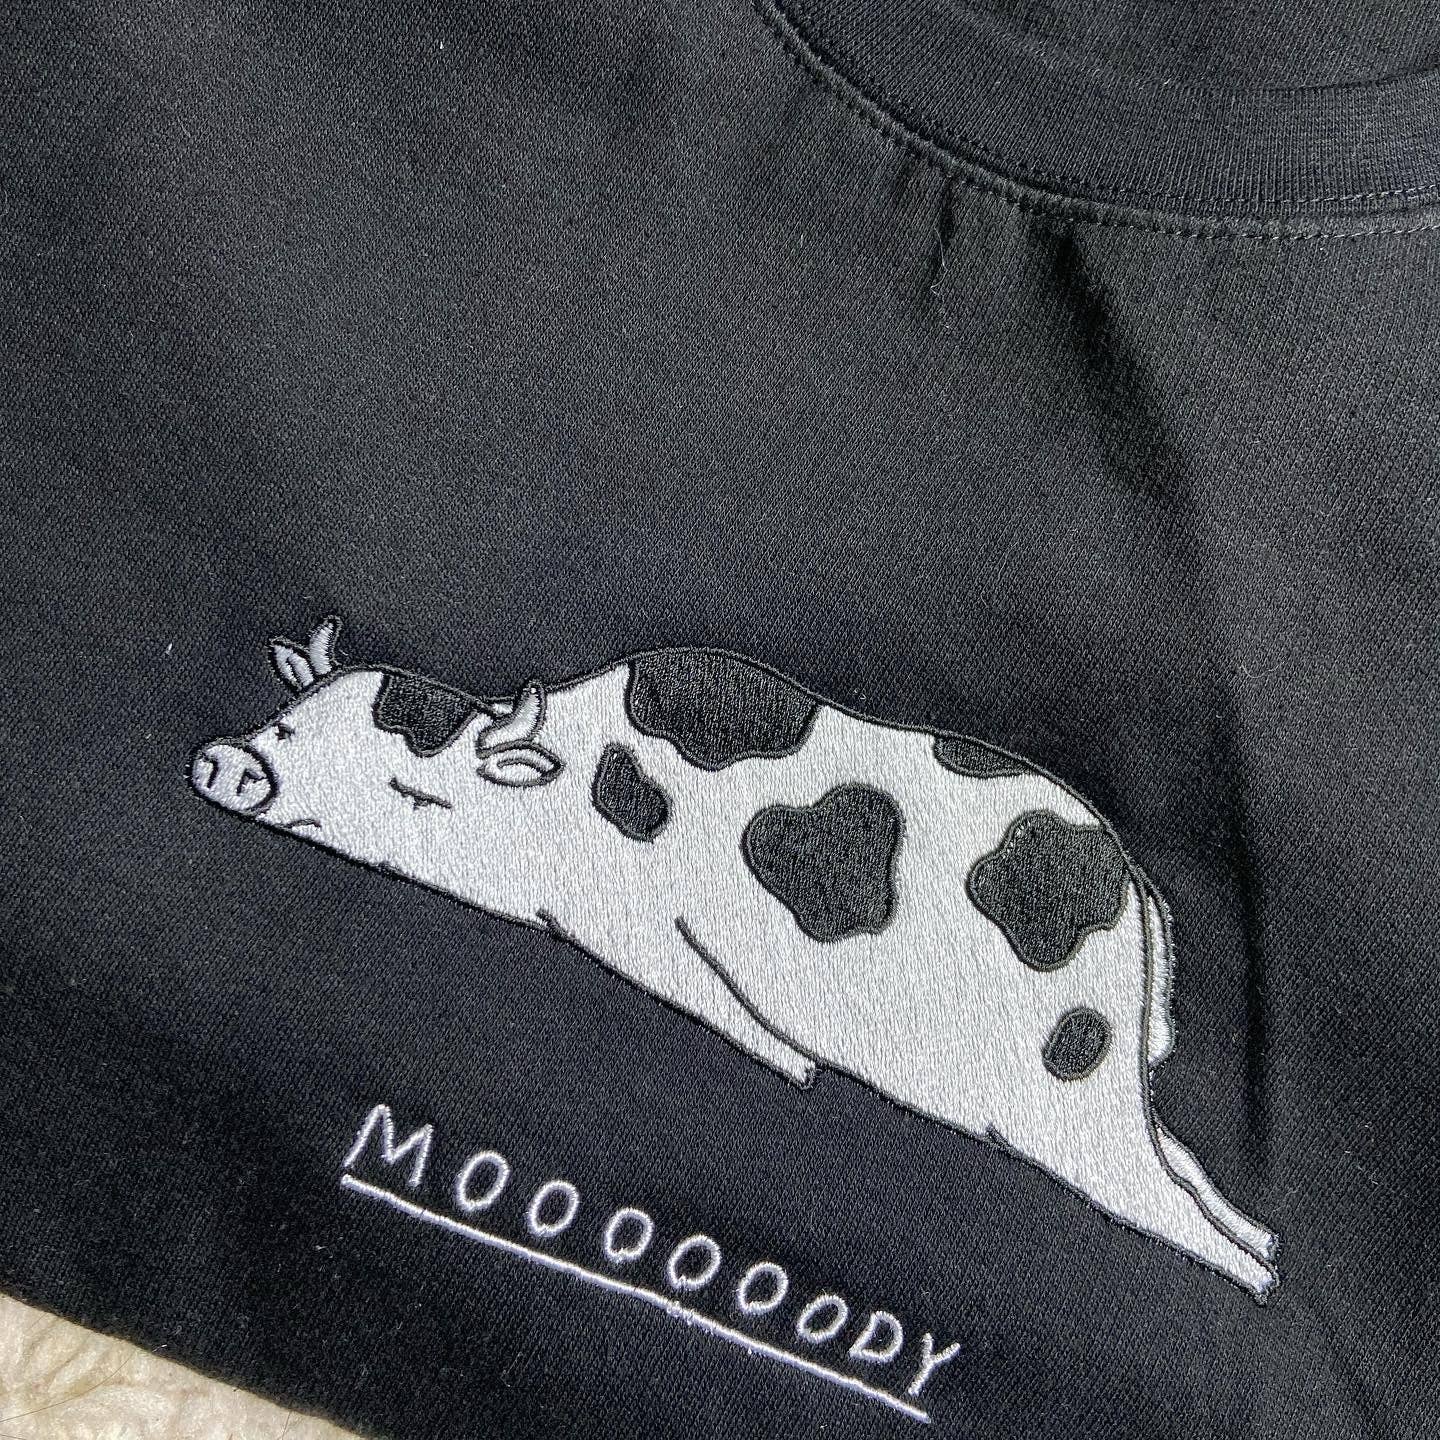 Gunpowder and lace wholesale - Moody cow design black & white